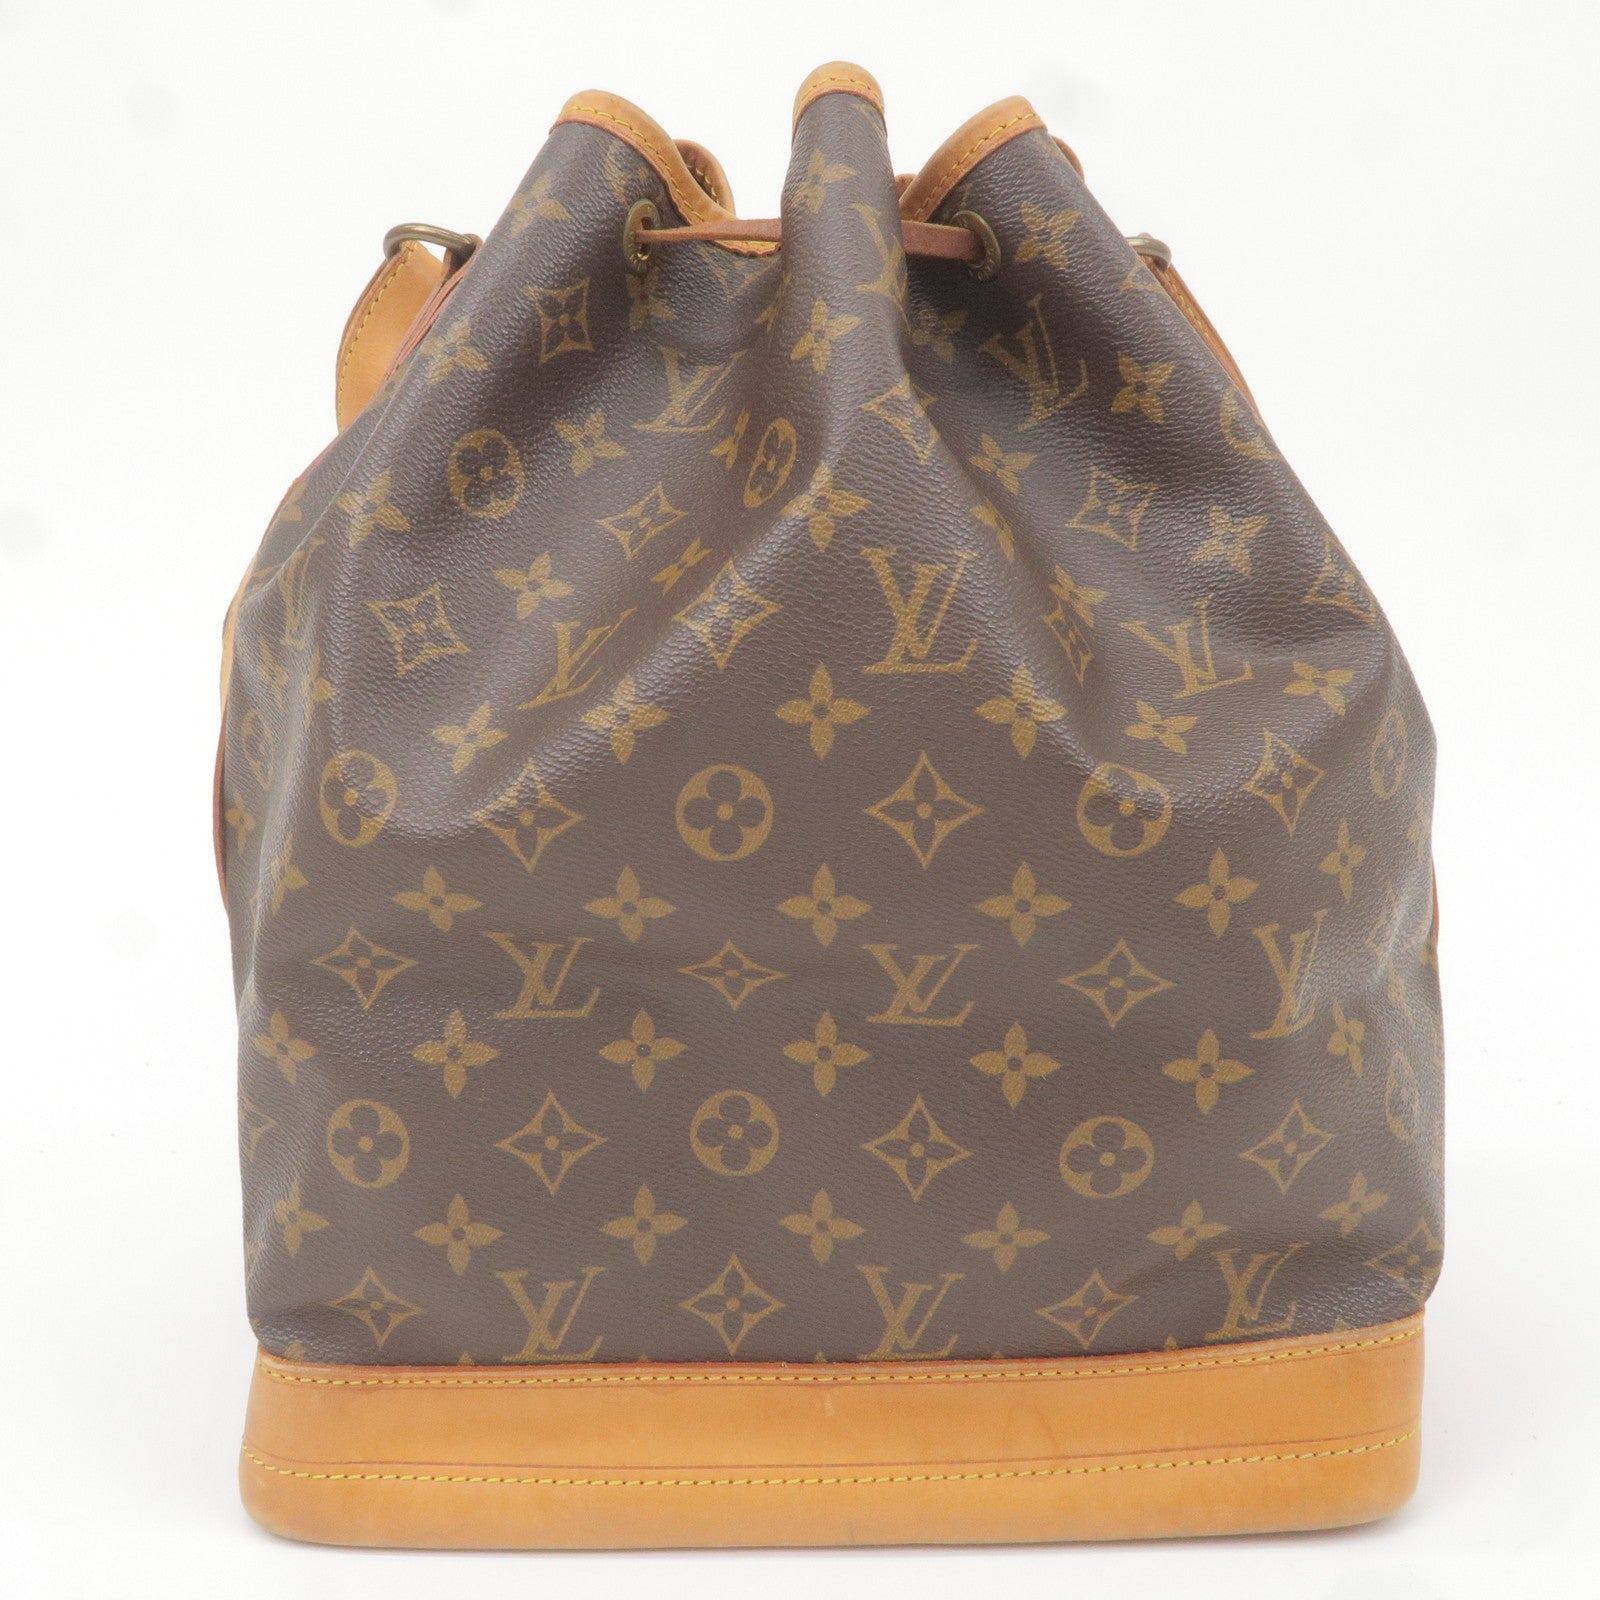 Vuitton - Hand - Louis - Monogram - M42224 – Yoon of AMBUSH Offers Sneak  Peek at Virgil Abloh's Louis Vuitton x Nike Air Force 1 - Shoulder - Bag -  Love the Louis Vuitton pochette bags - Bag - Noe